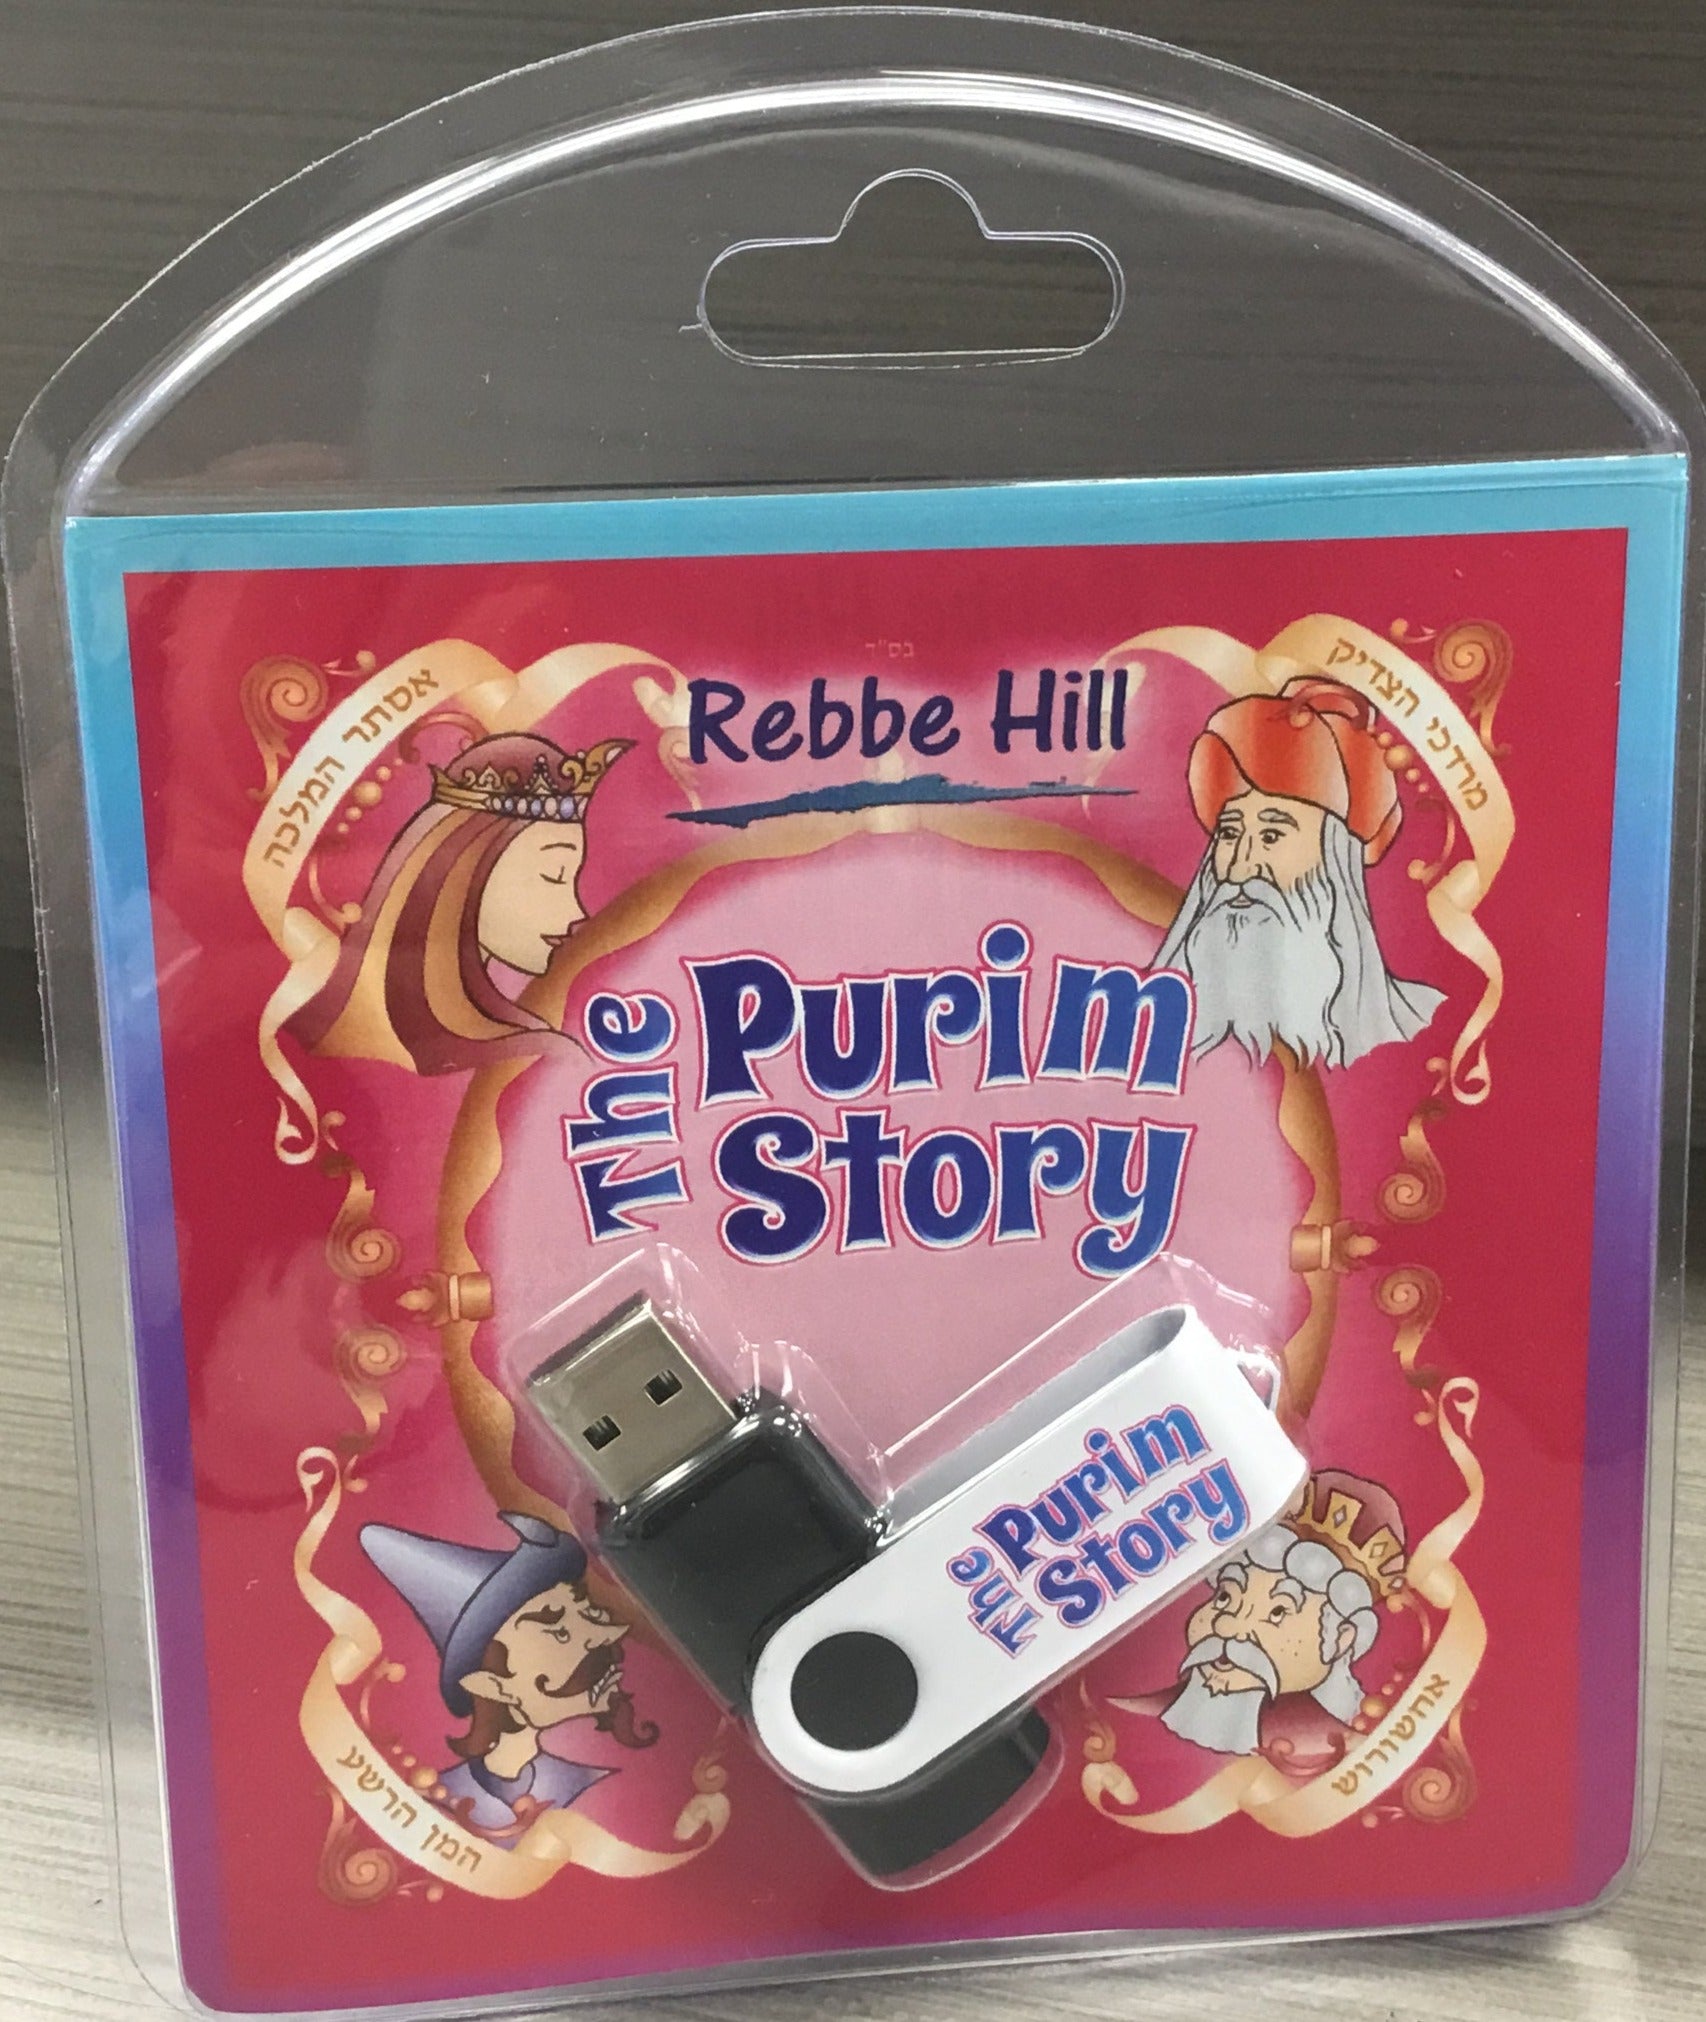 Rebbe Hill - The Purim Story (USB)